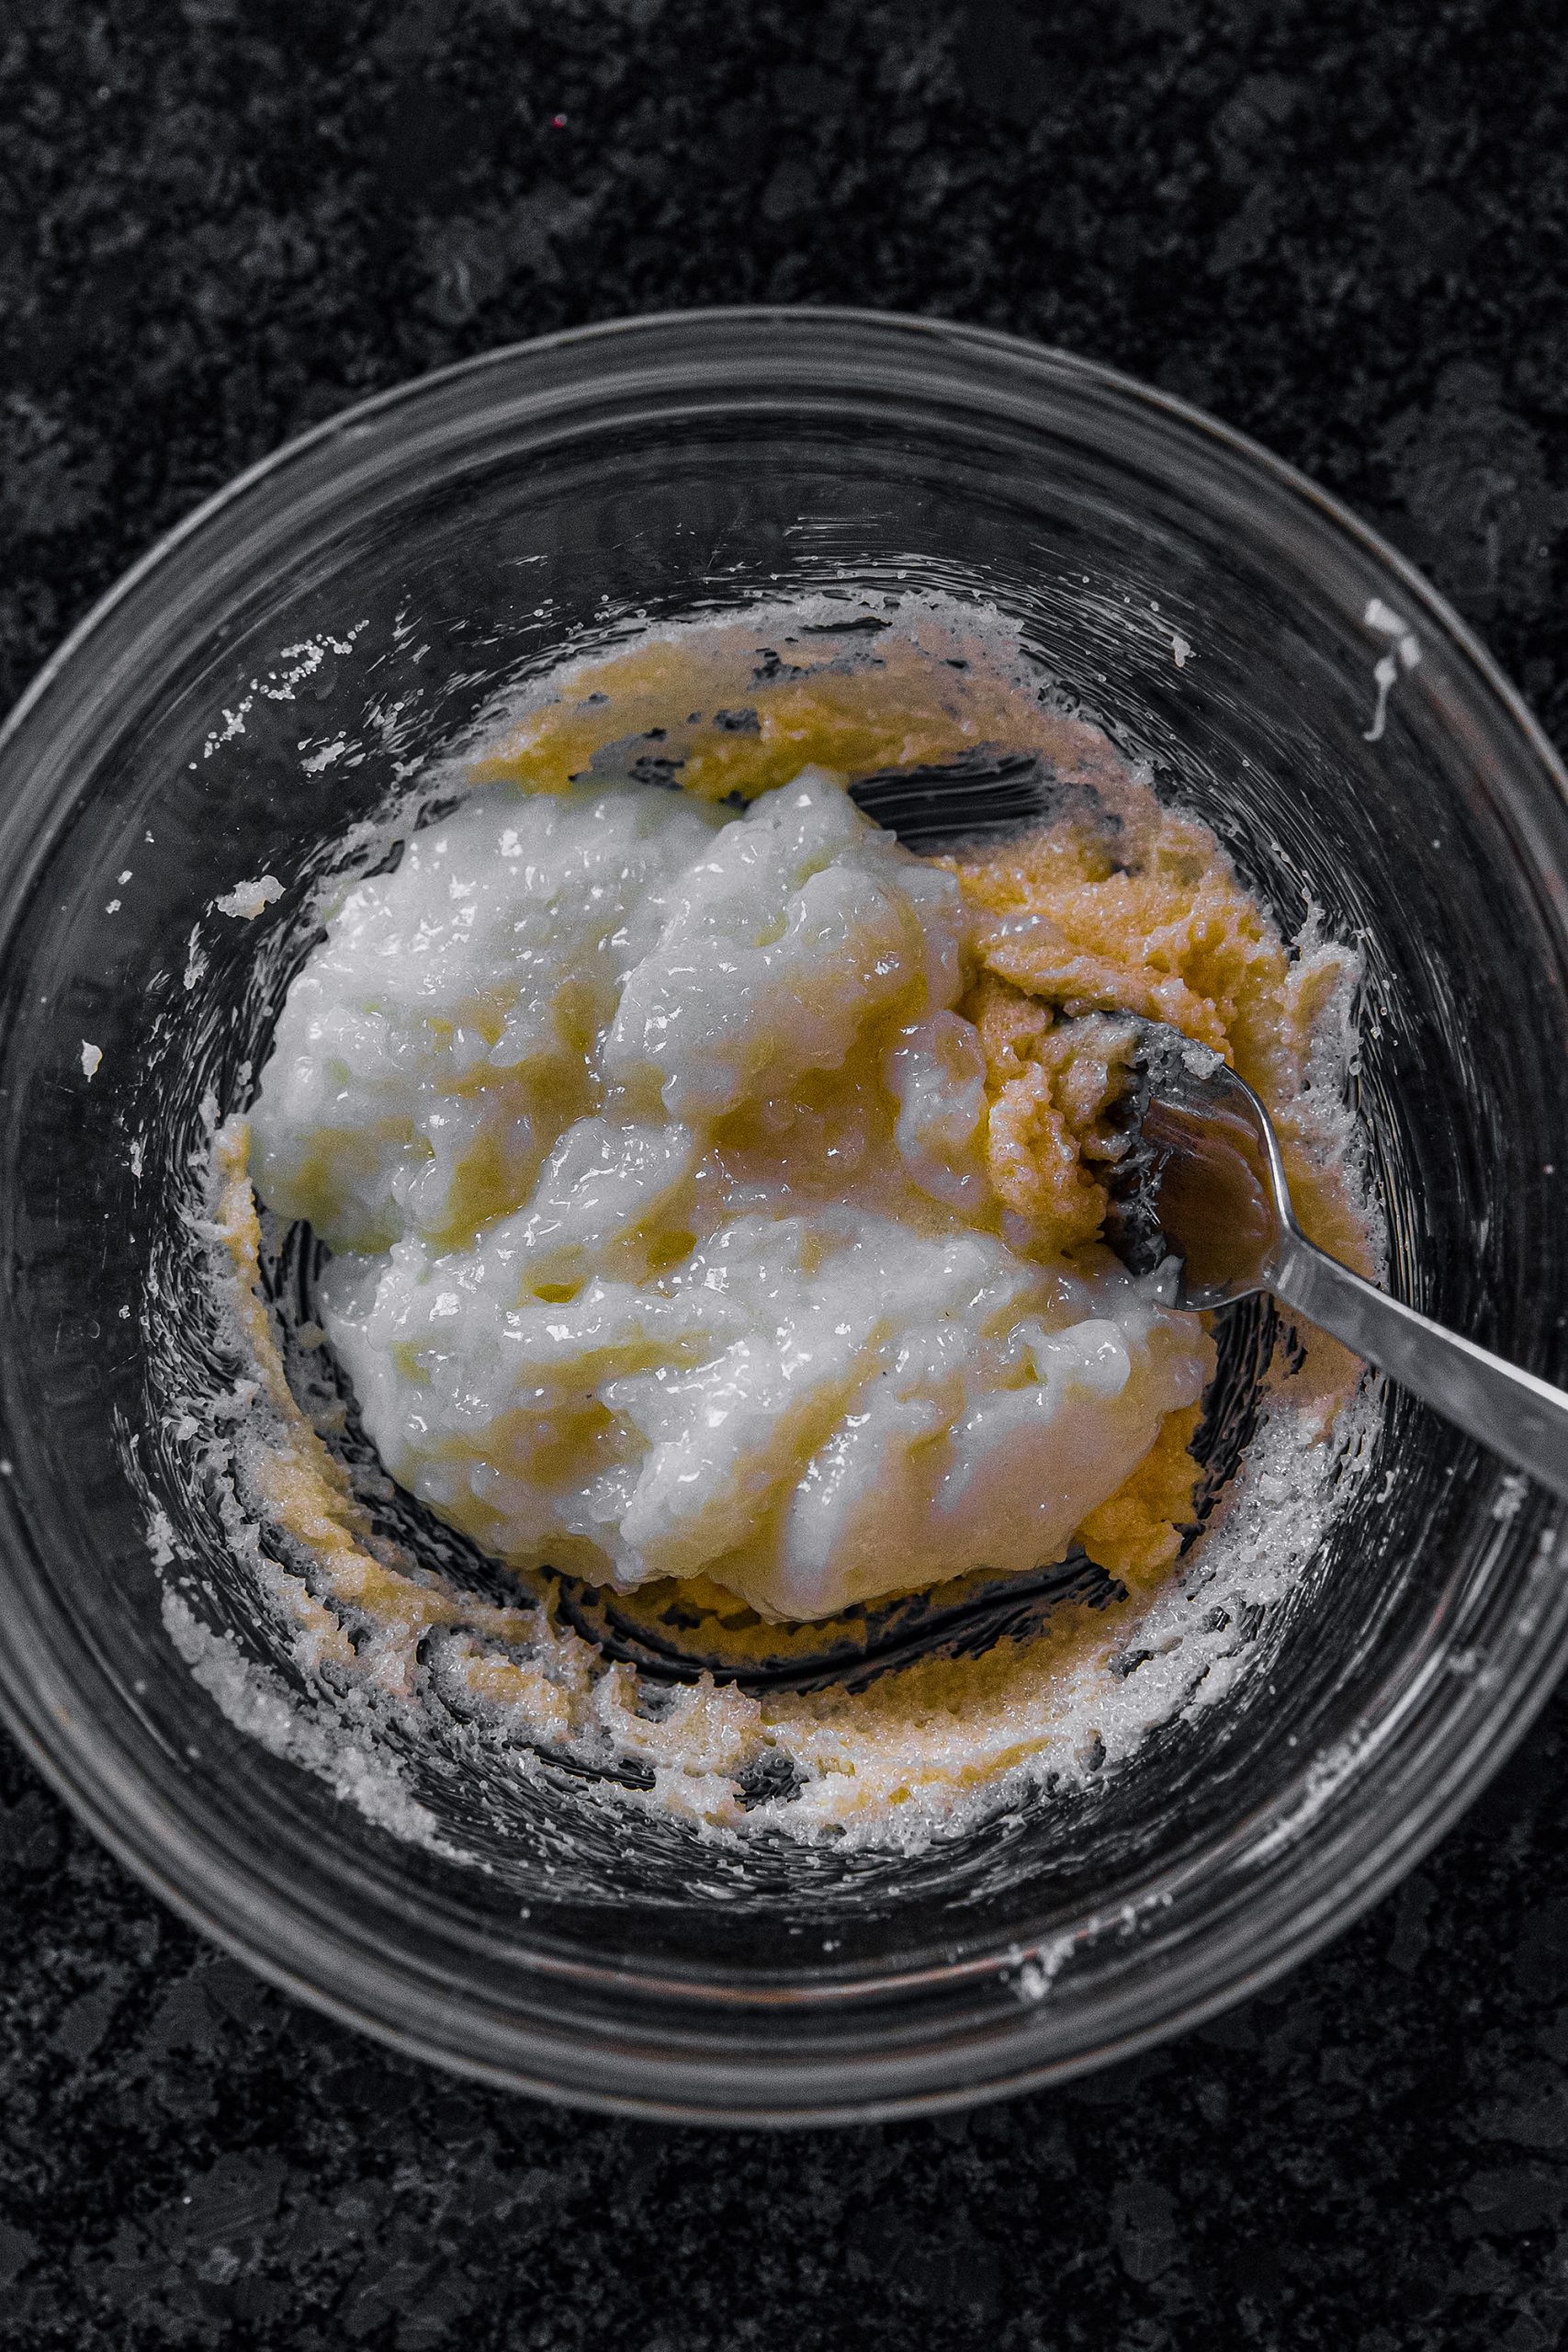  In a saucepan bring milk to a simmer then stir in sugar(1/4c).